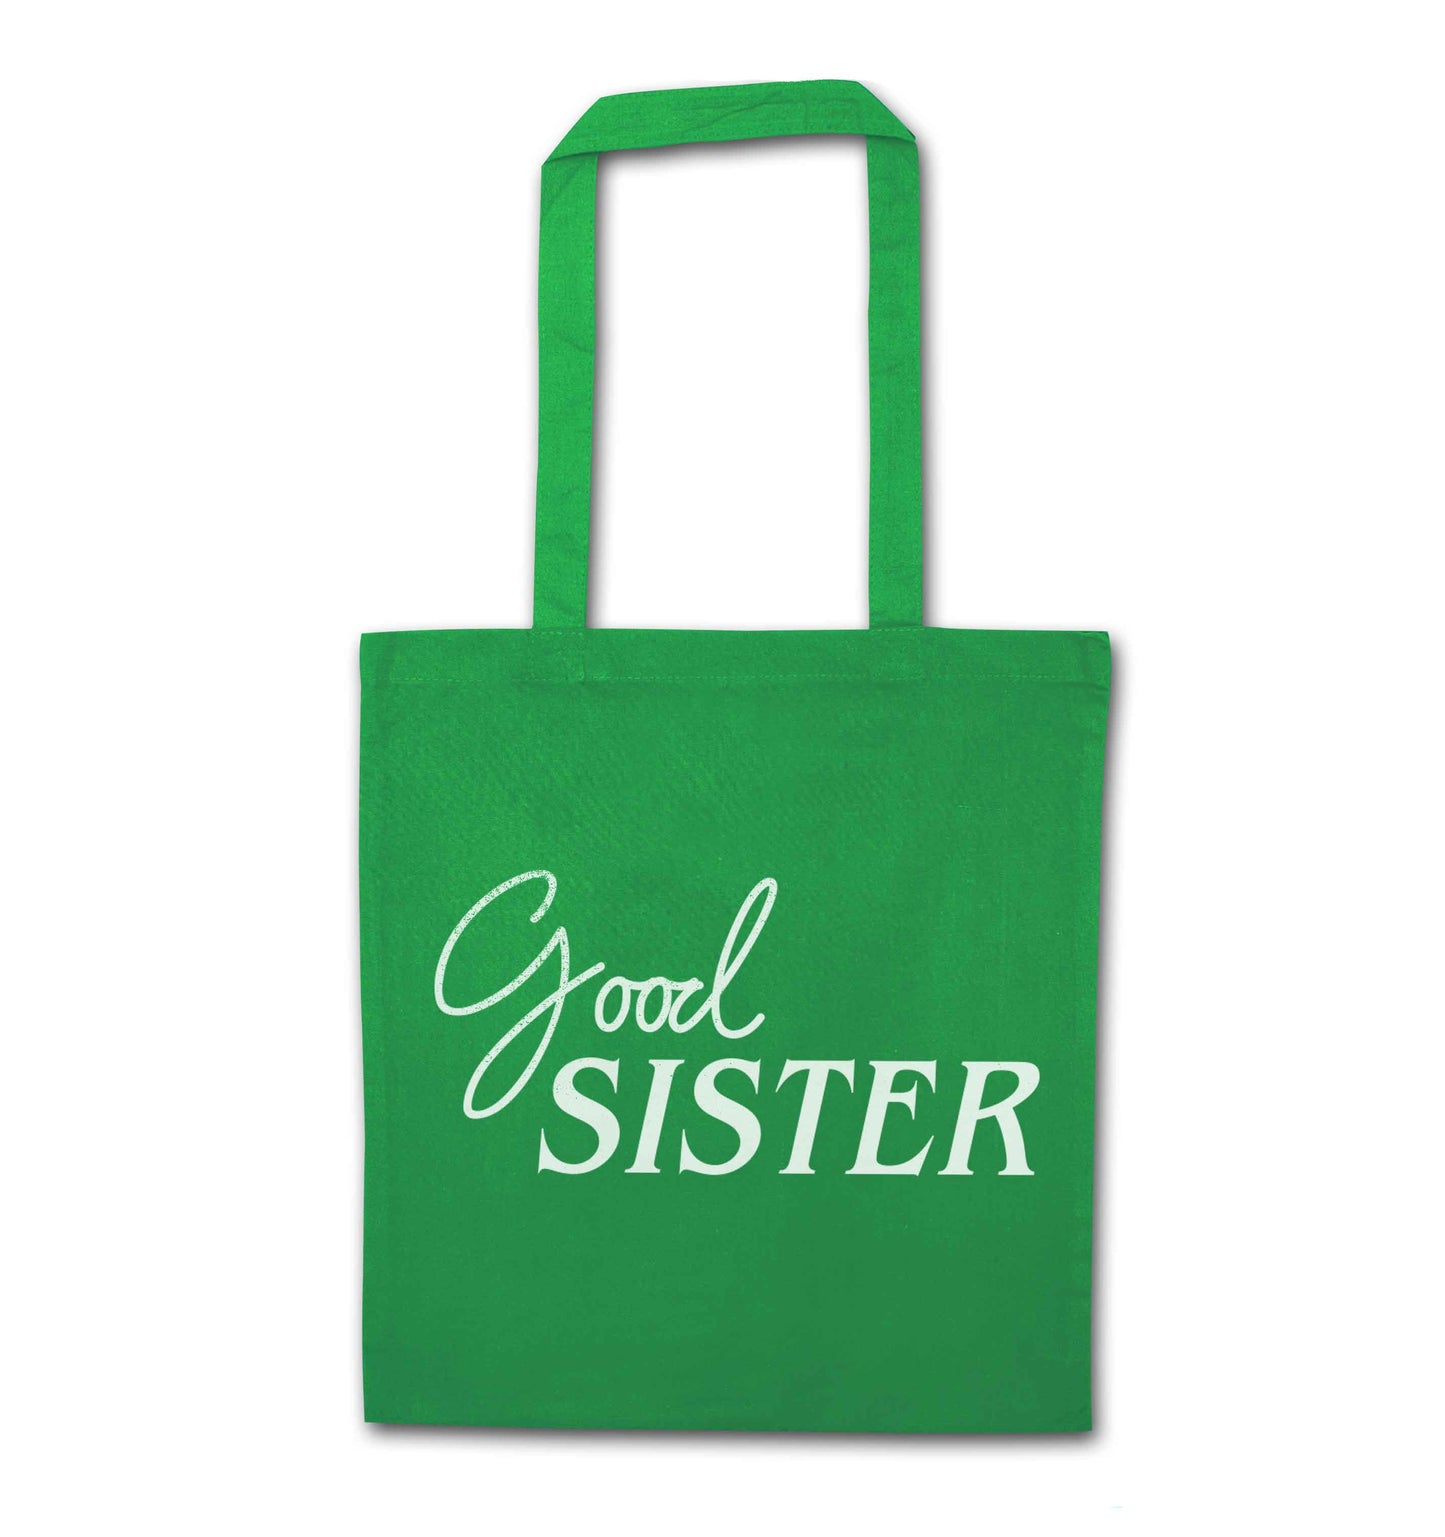 Good sister green tote bag